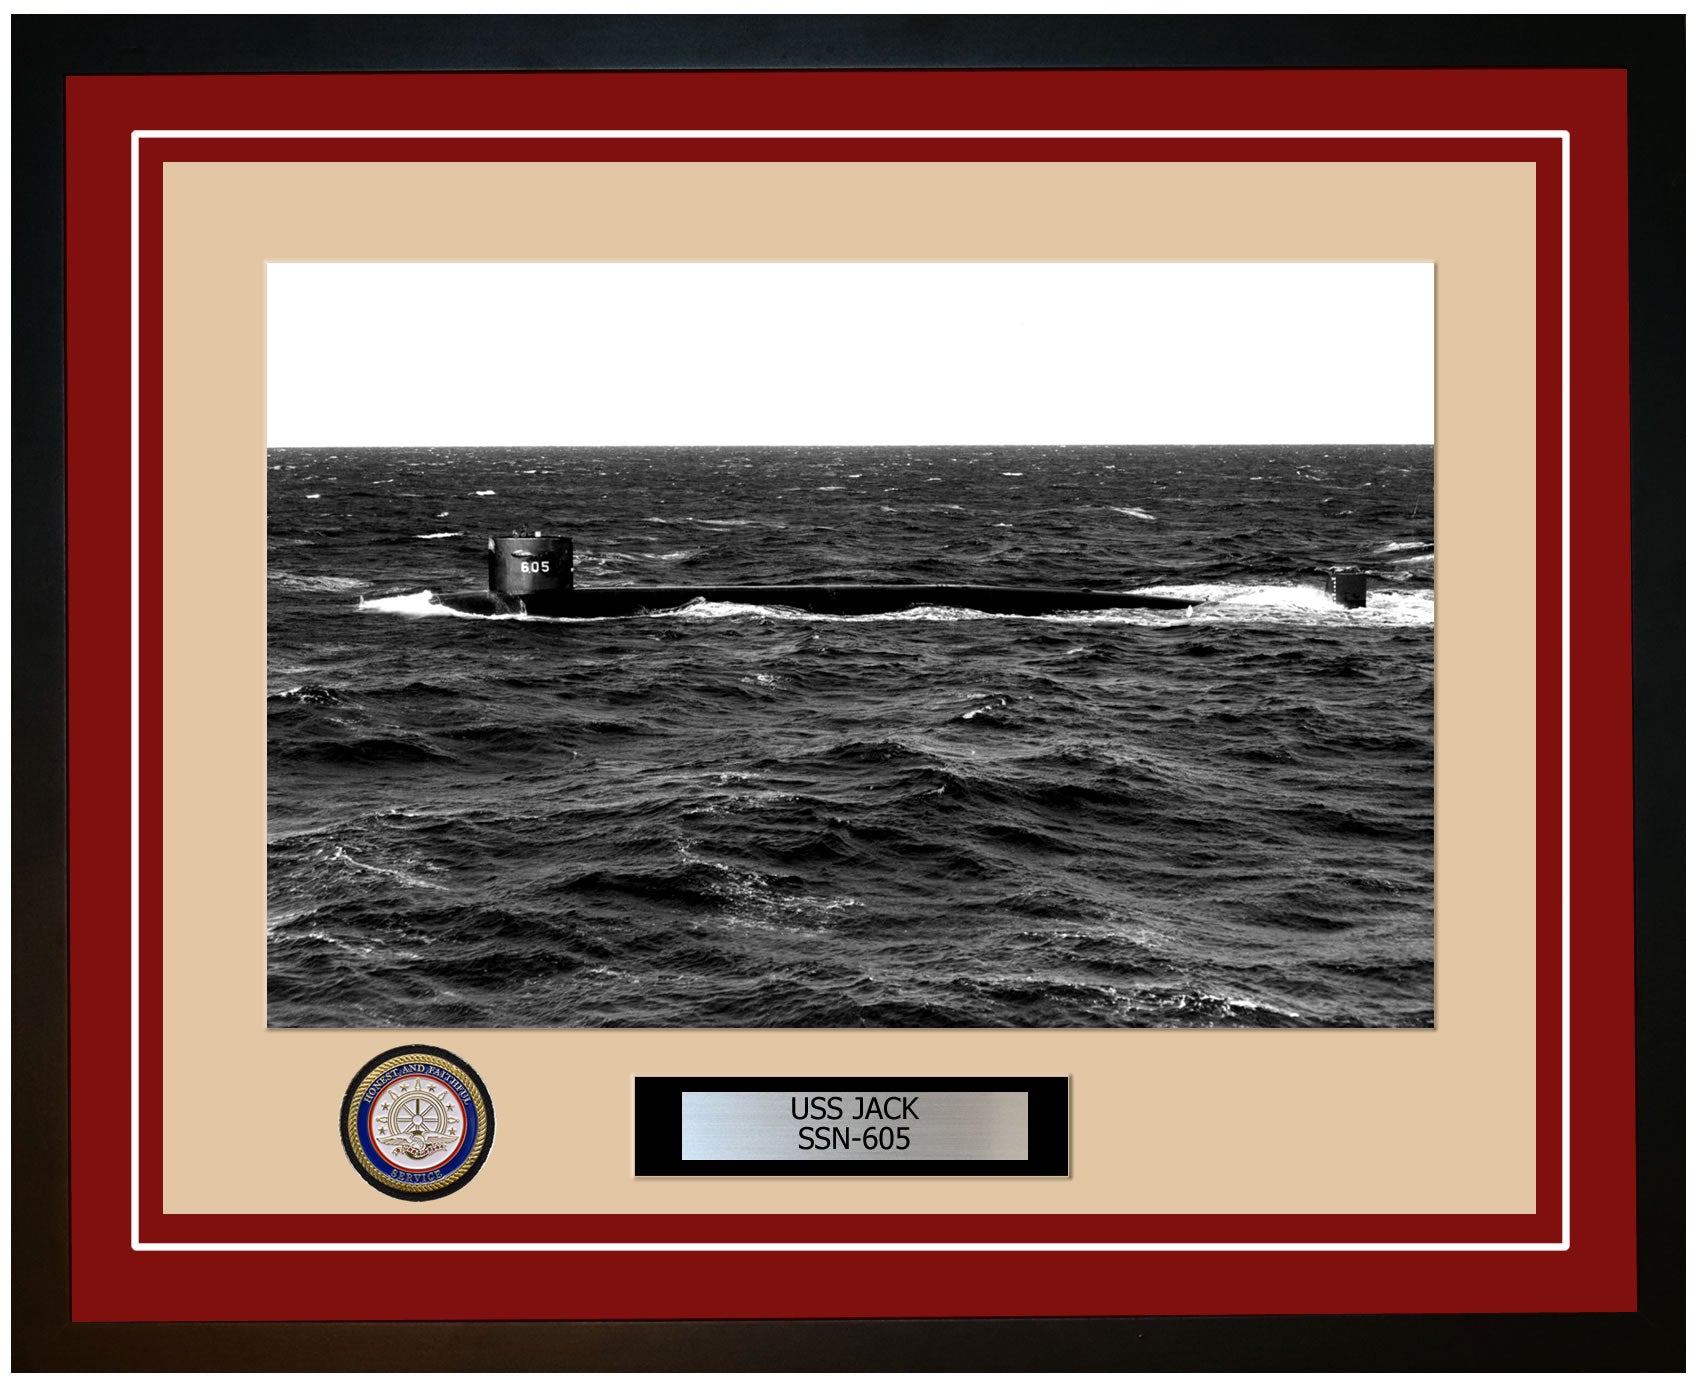 USS Jack SSN-605 Framed Navy Ship Photo Burgundy